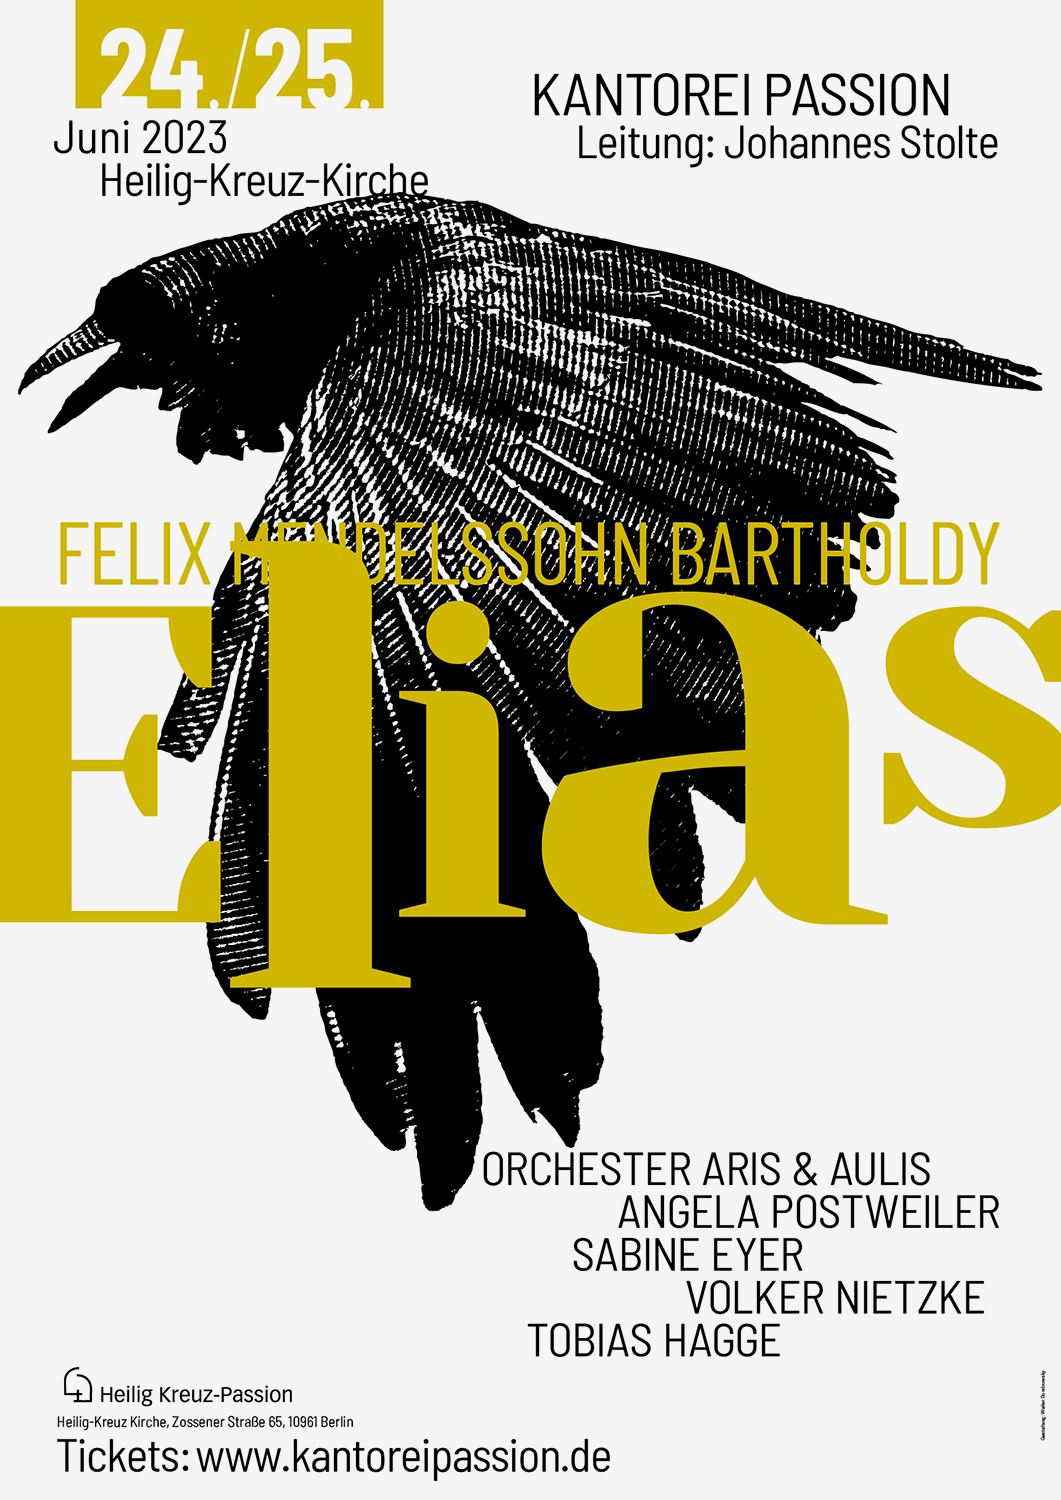 Plakat A1, Felix Mendelssohn Bartholdy, Elias Oratorium der Kantorei Passion